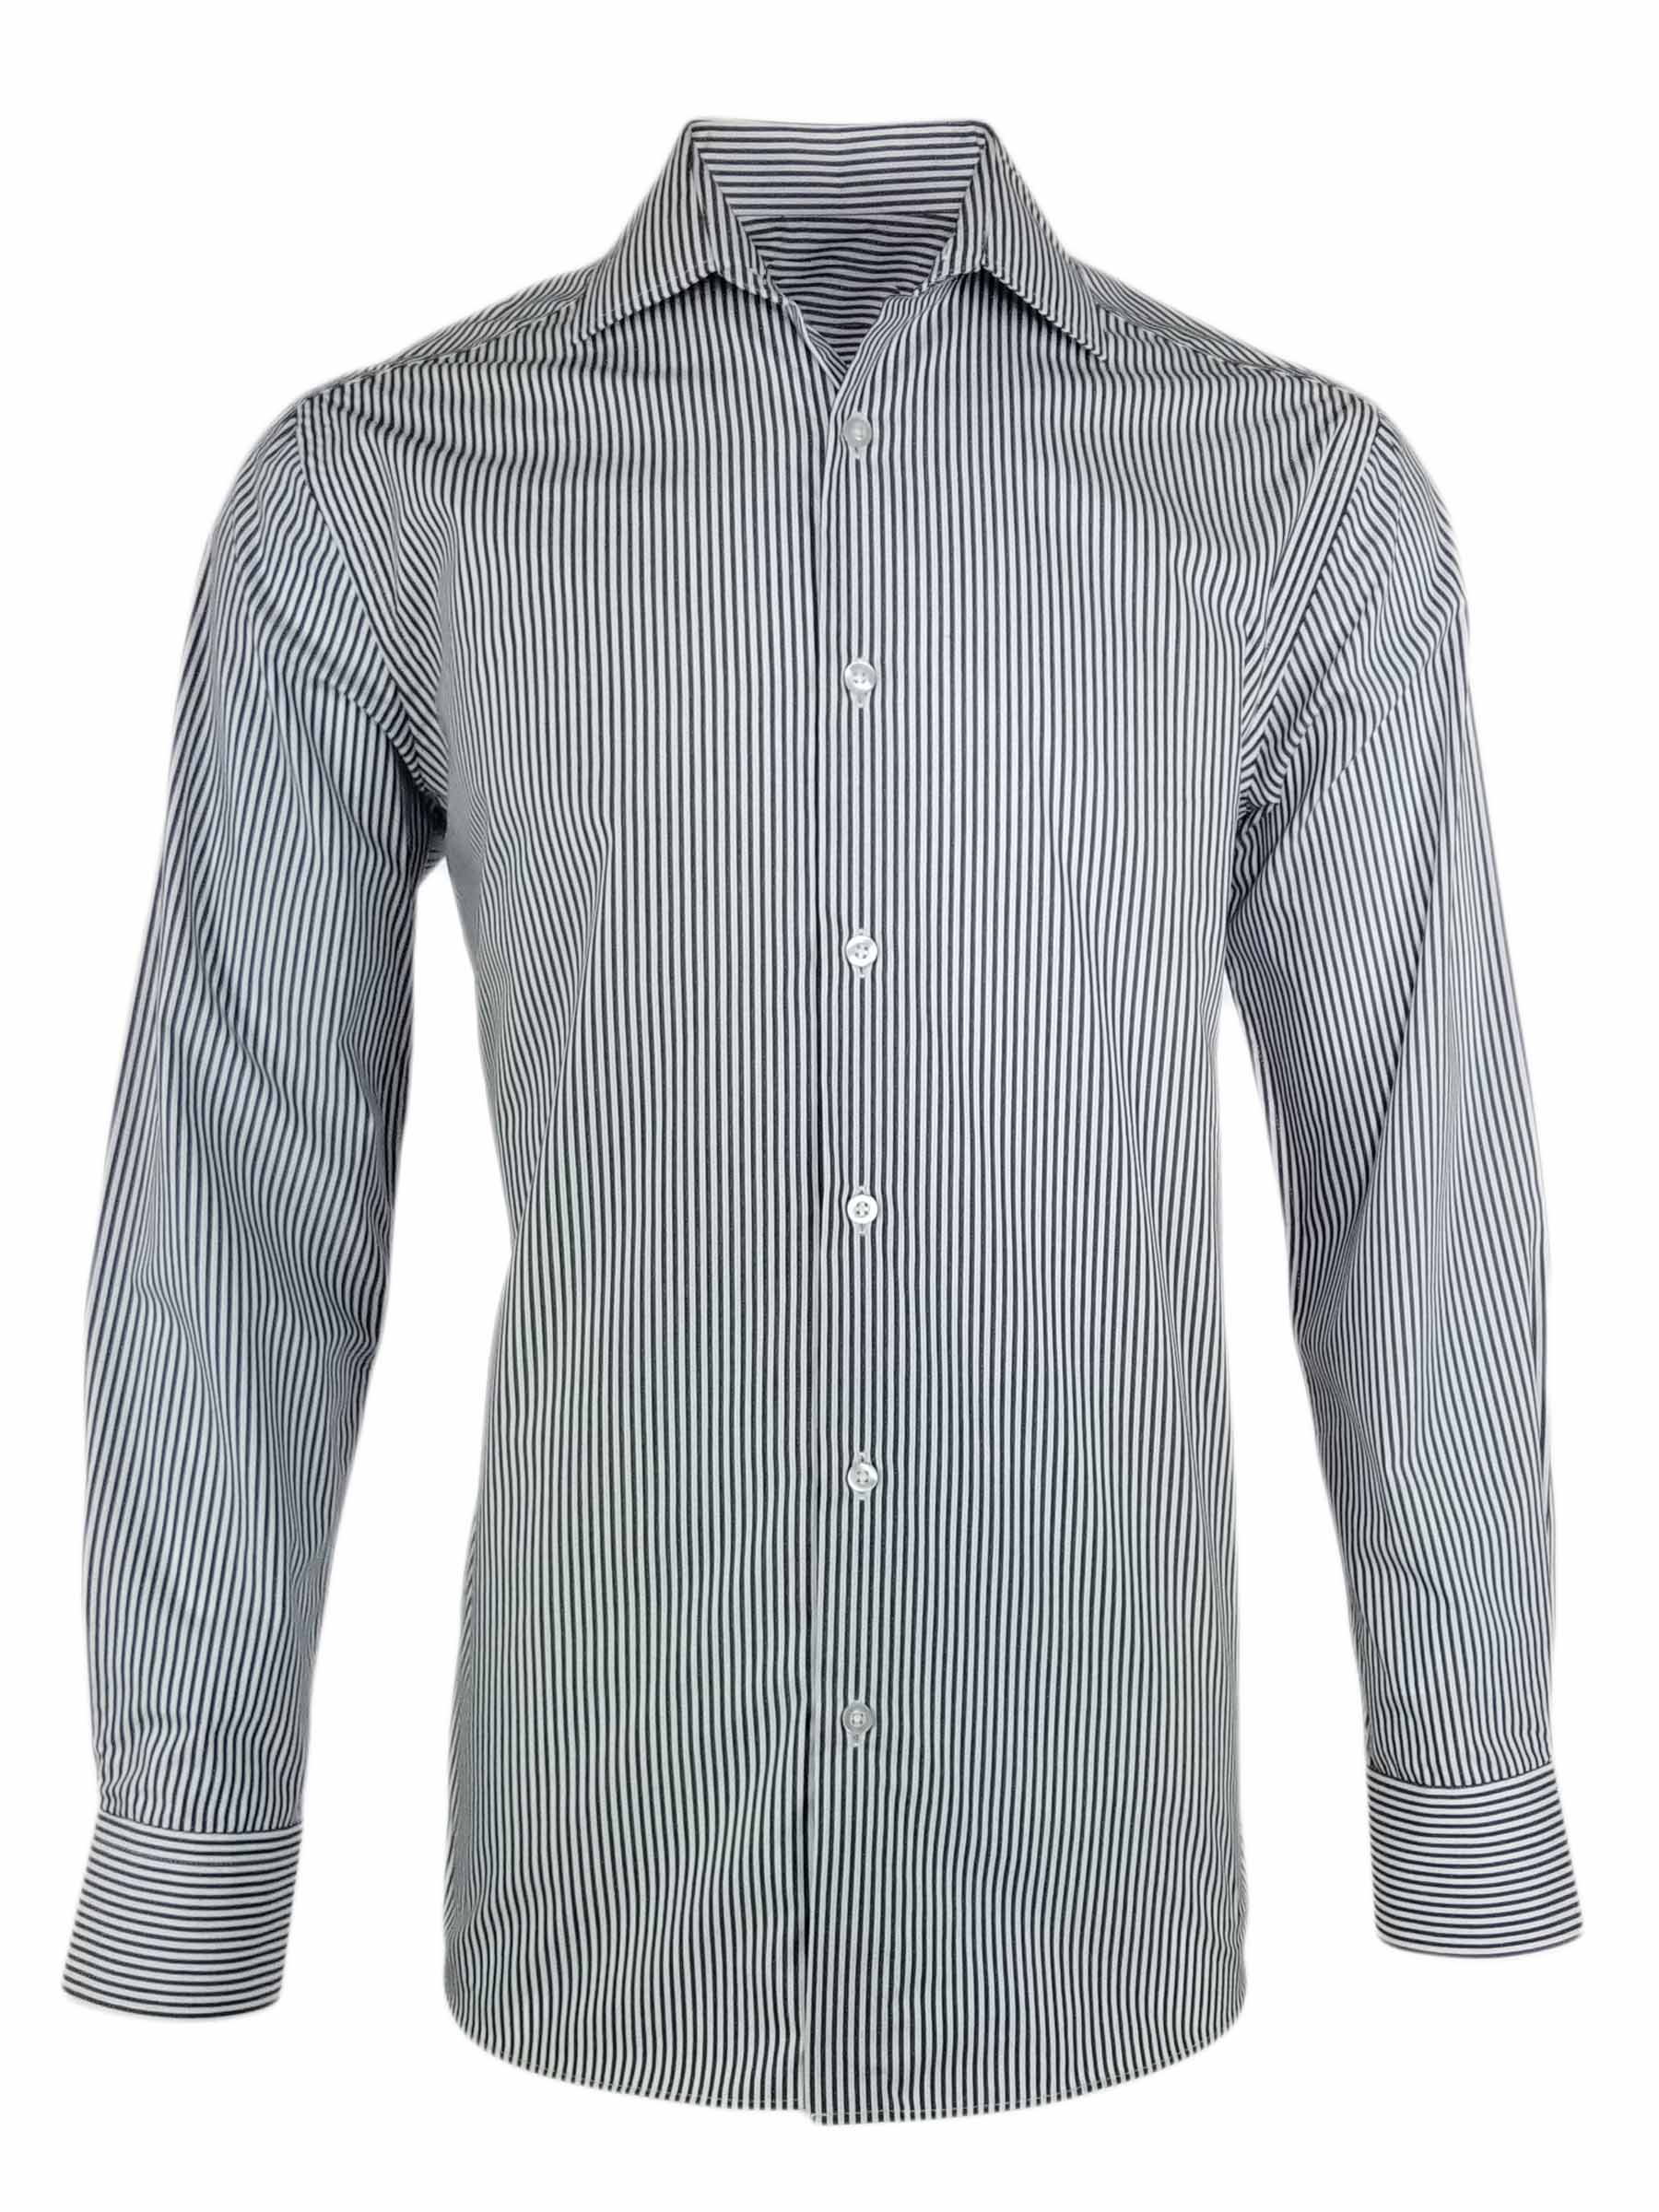 Men's Milan Shirt - Black and White Stripe Long Sleeve - Uniform Edit